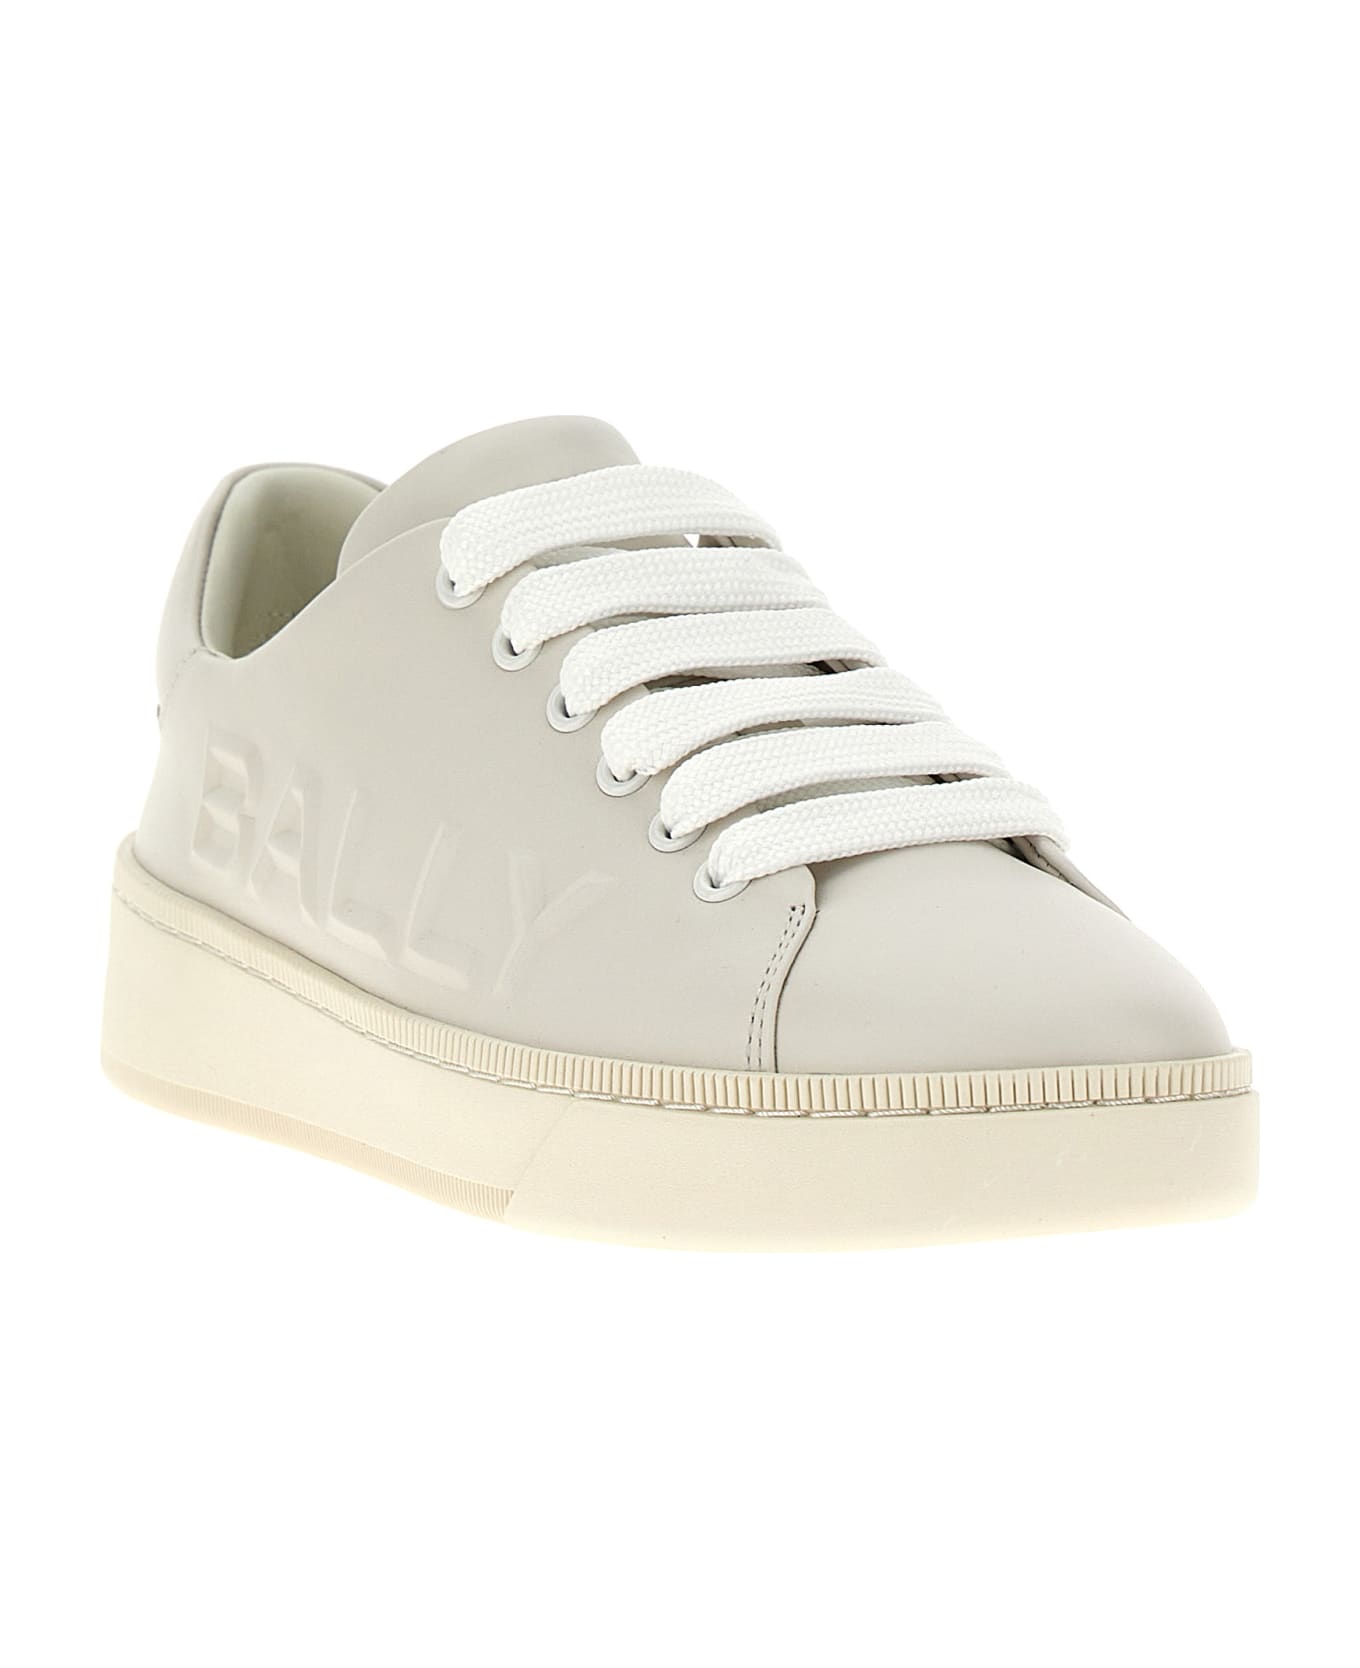 Bally 'reka' Sneakers - White